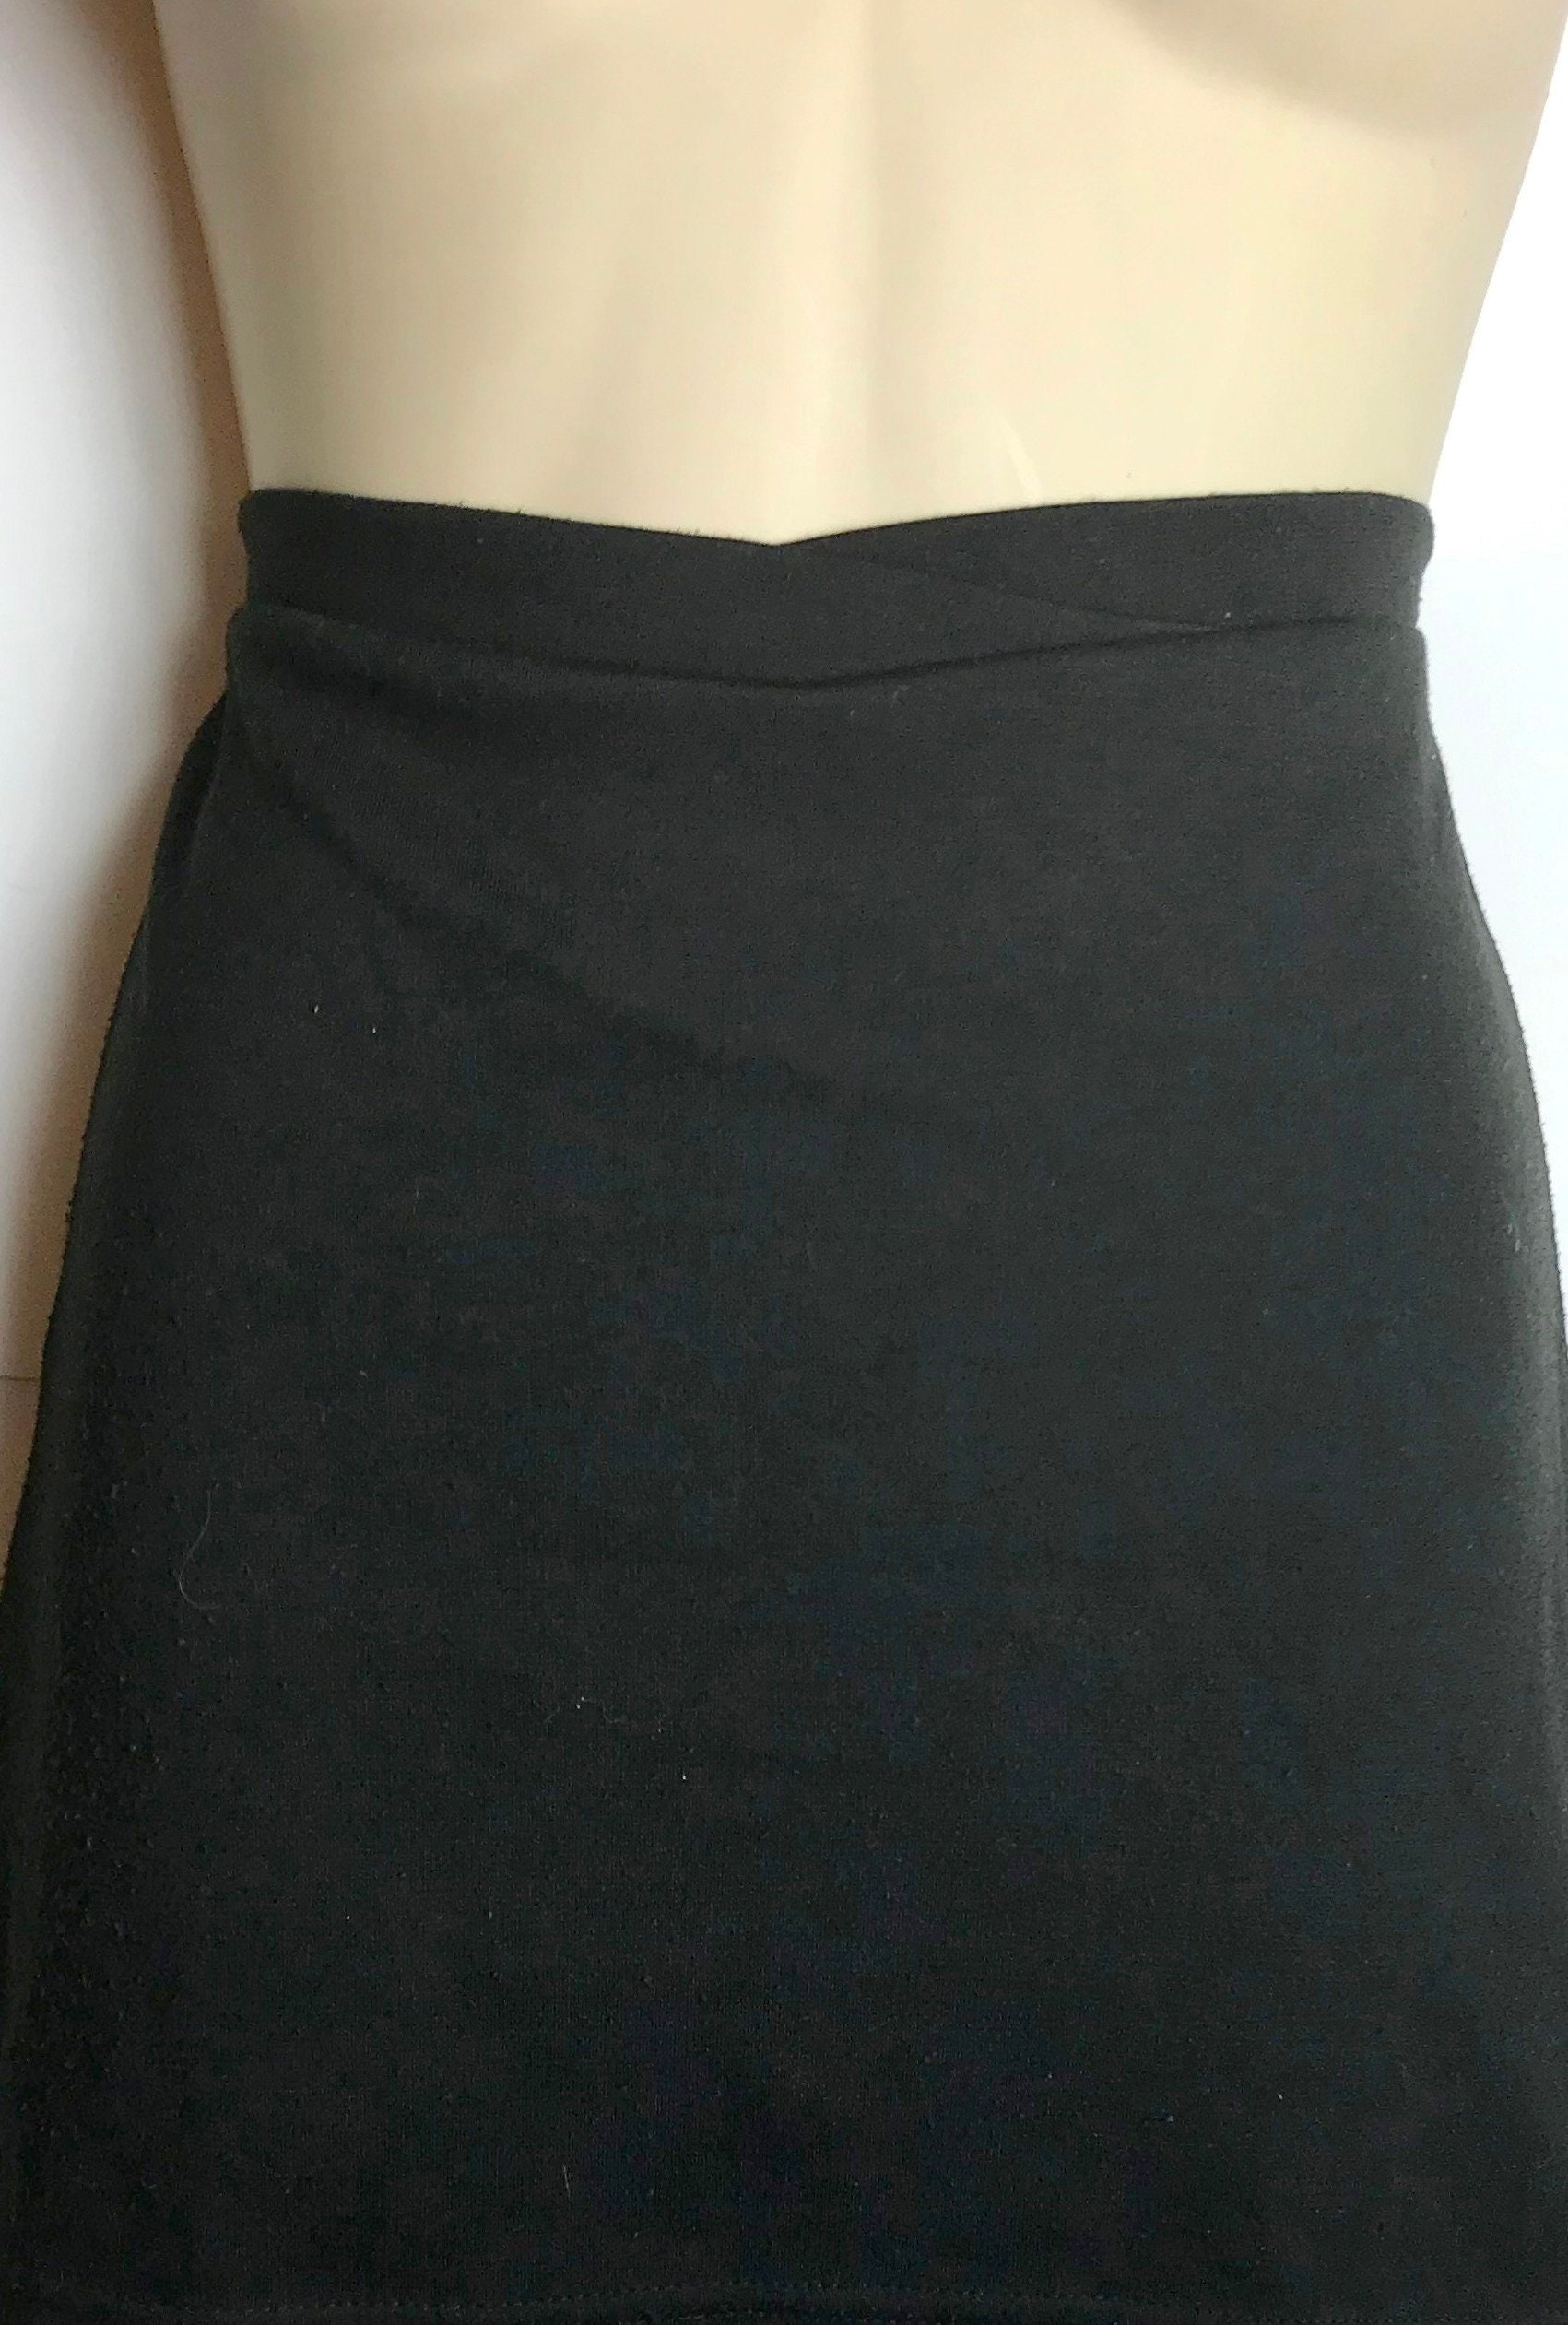 Vintage Black and White Stretchy Mini Skirt